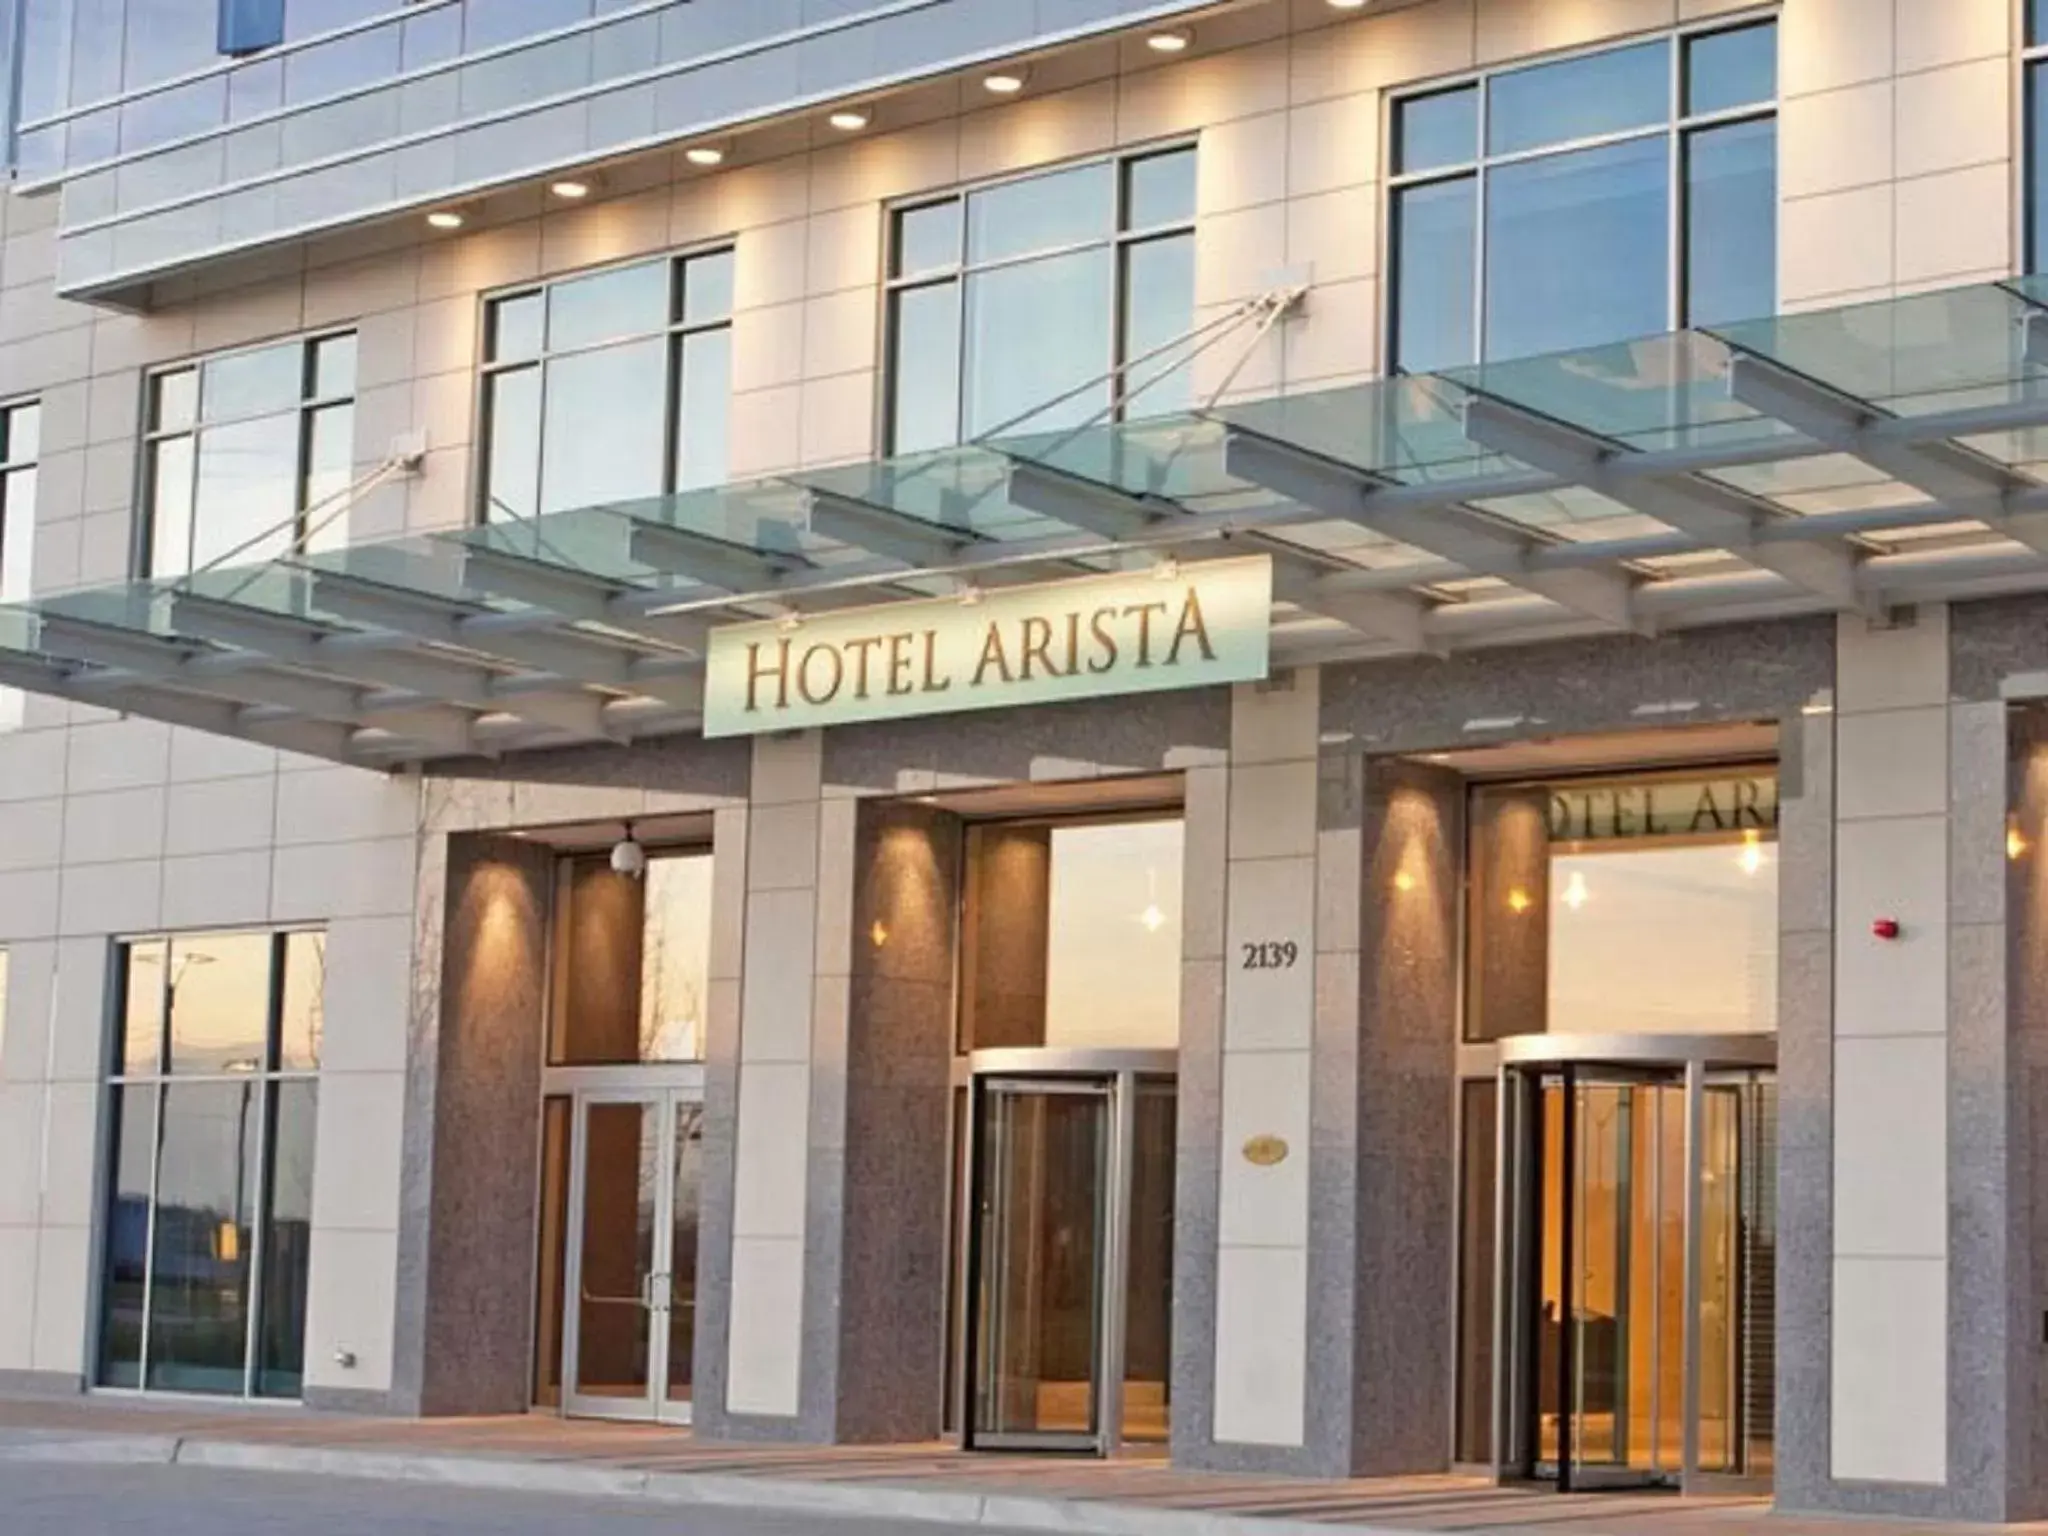 Facade/entrance in Hotel Arista